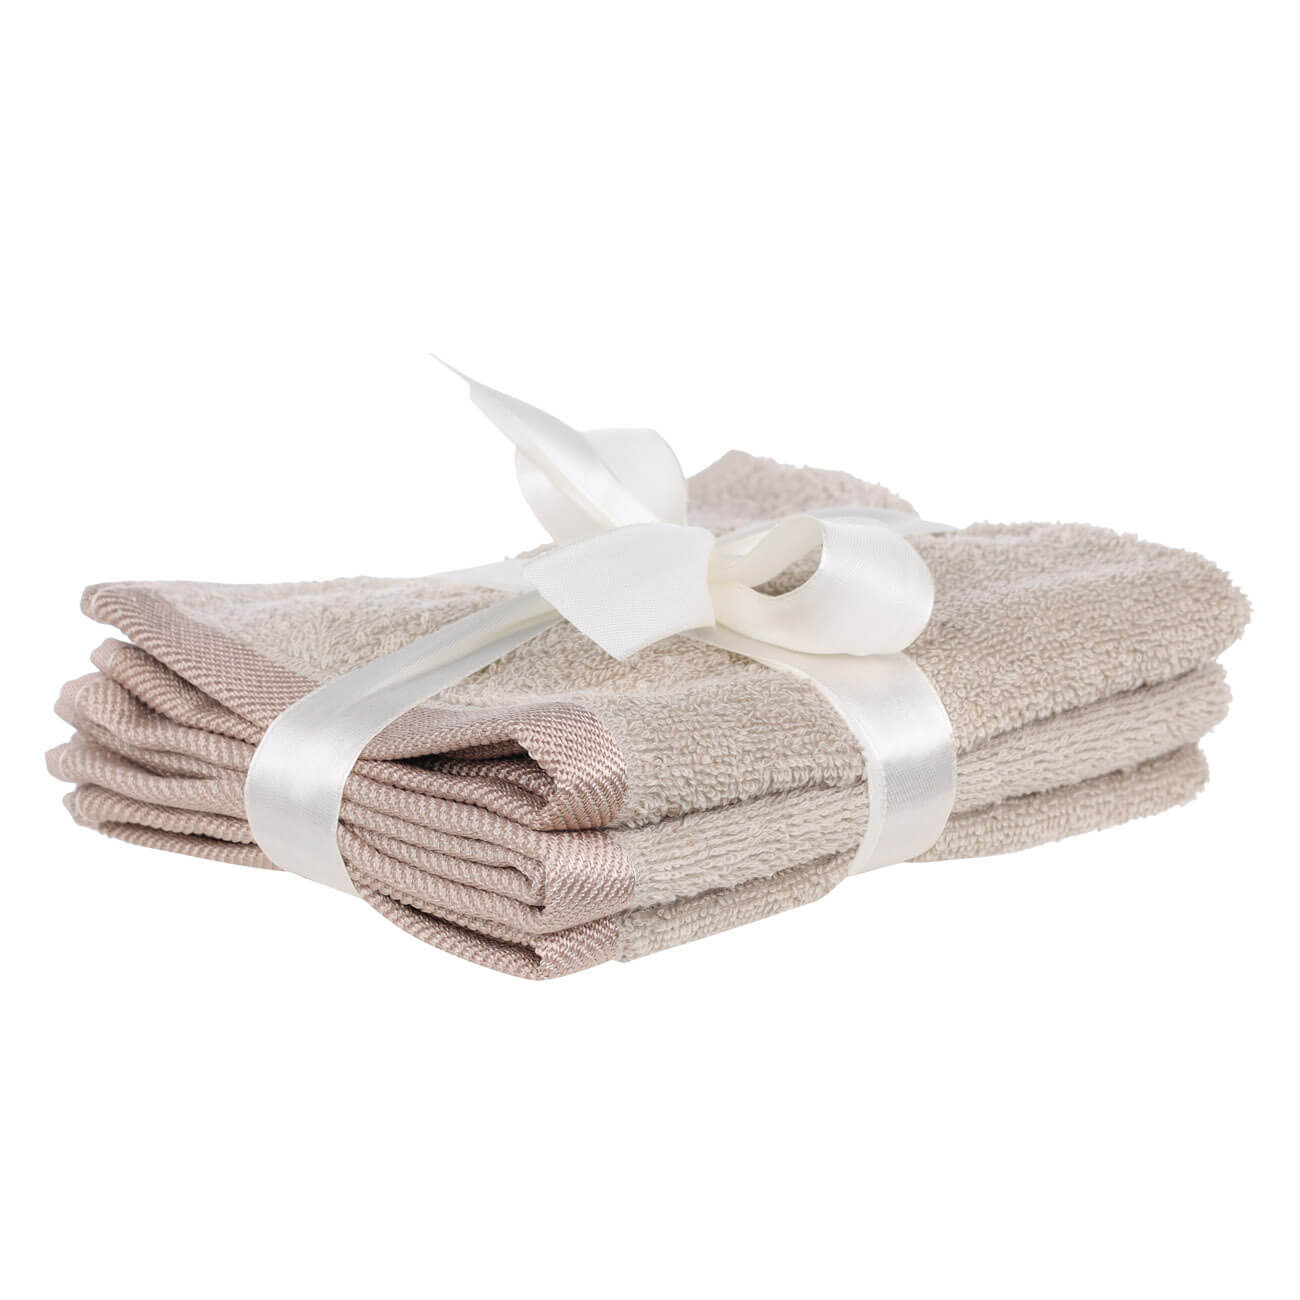 Полотенце, 30х30 см, 3 шт, хлопок, бежевое, Wellness полотенце 30х30 см 6 шт в корзине с бантом хлопок бежевое белое basket towel